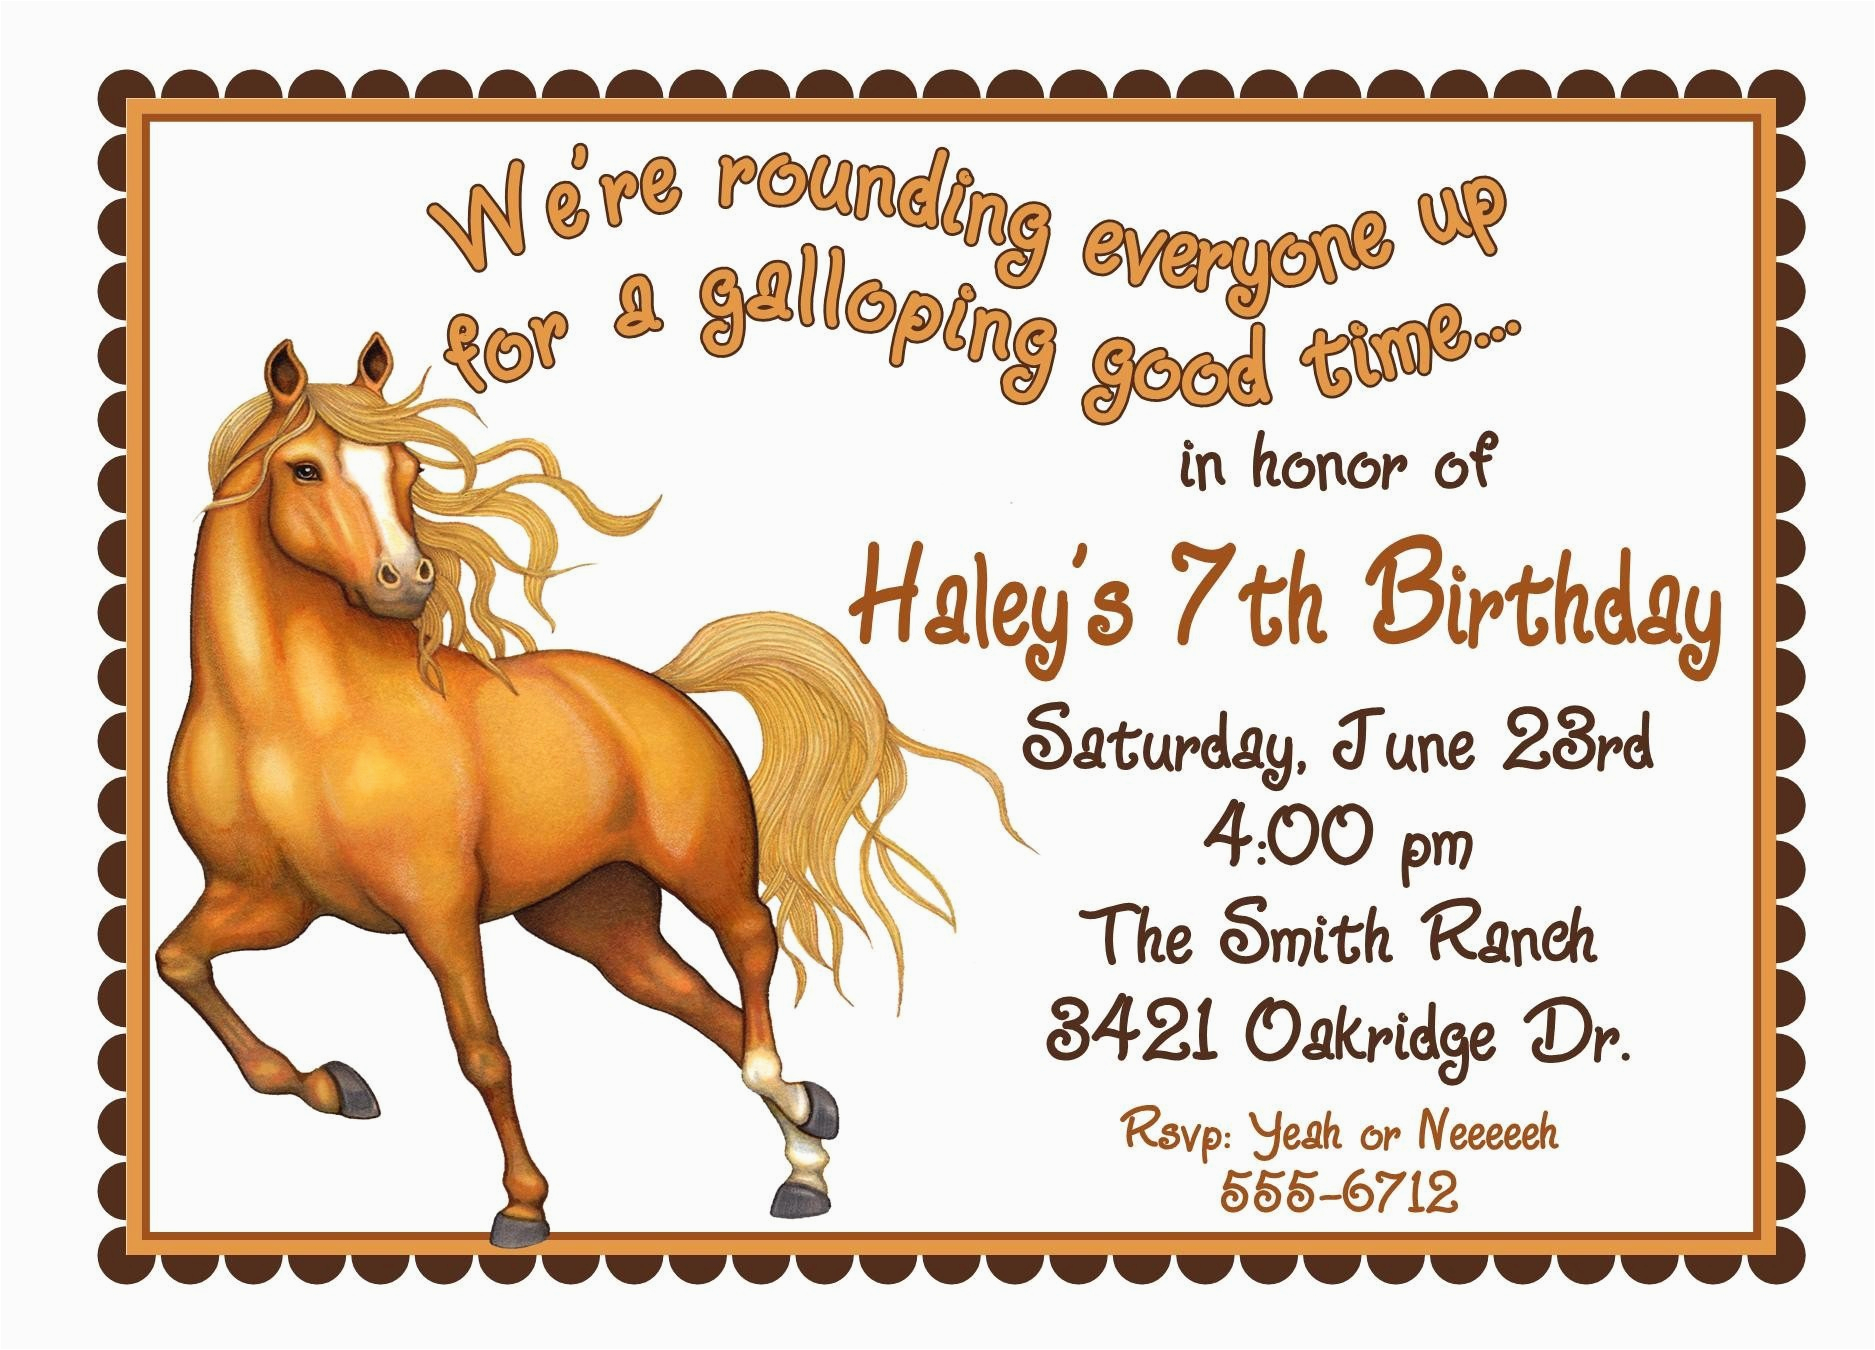 Horse Birthday Invites Personalized Birthday Invitations Horse Western Wild West